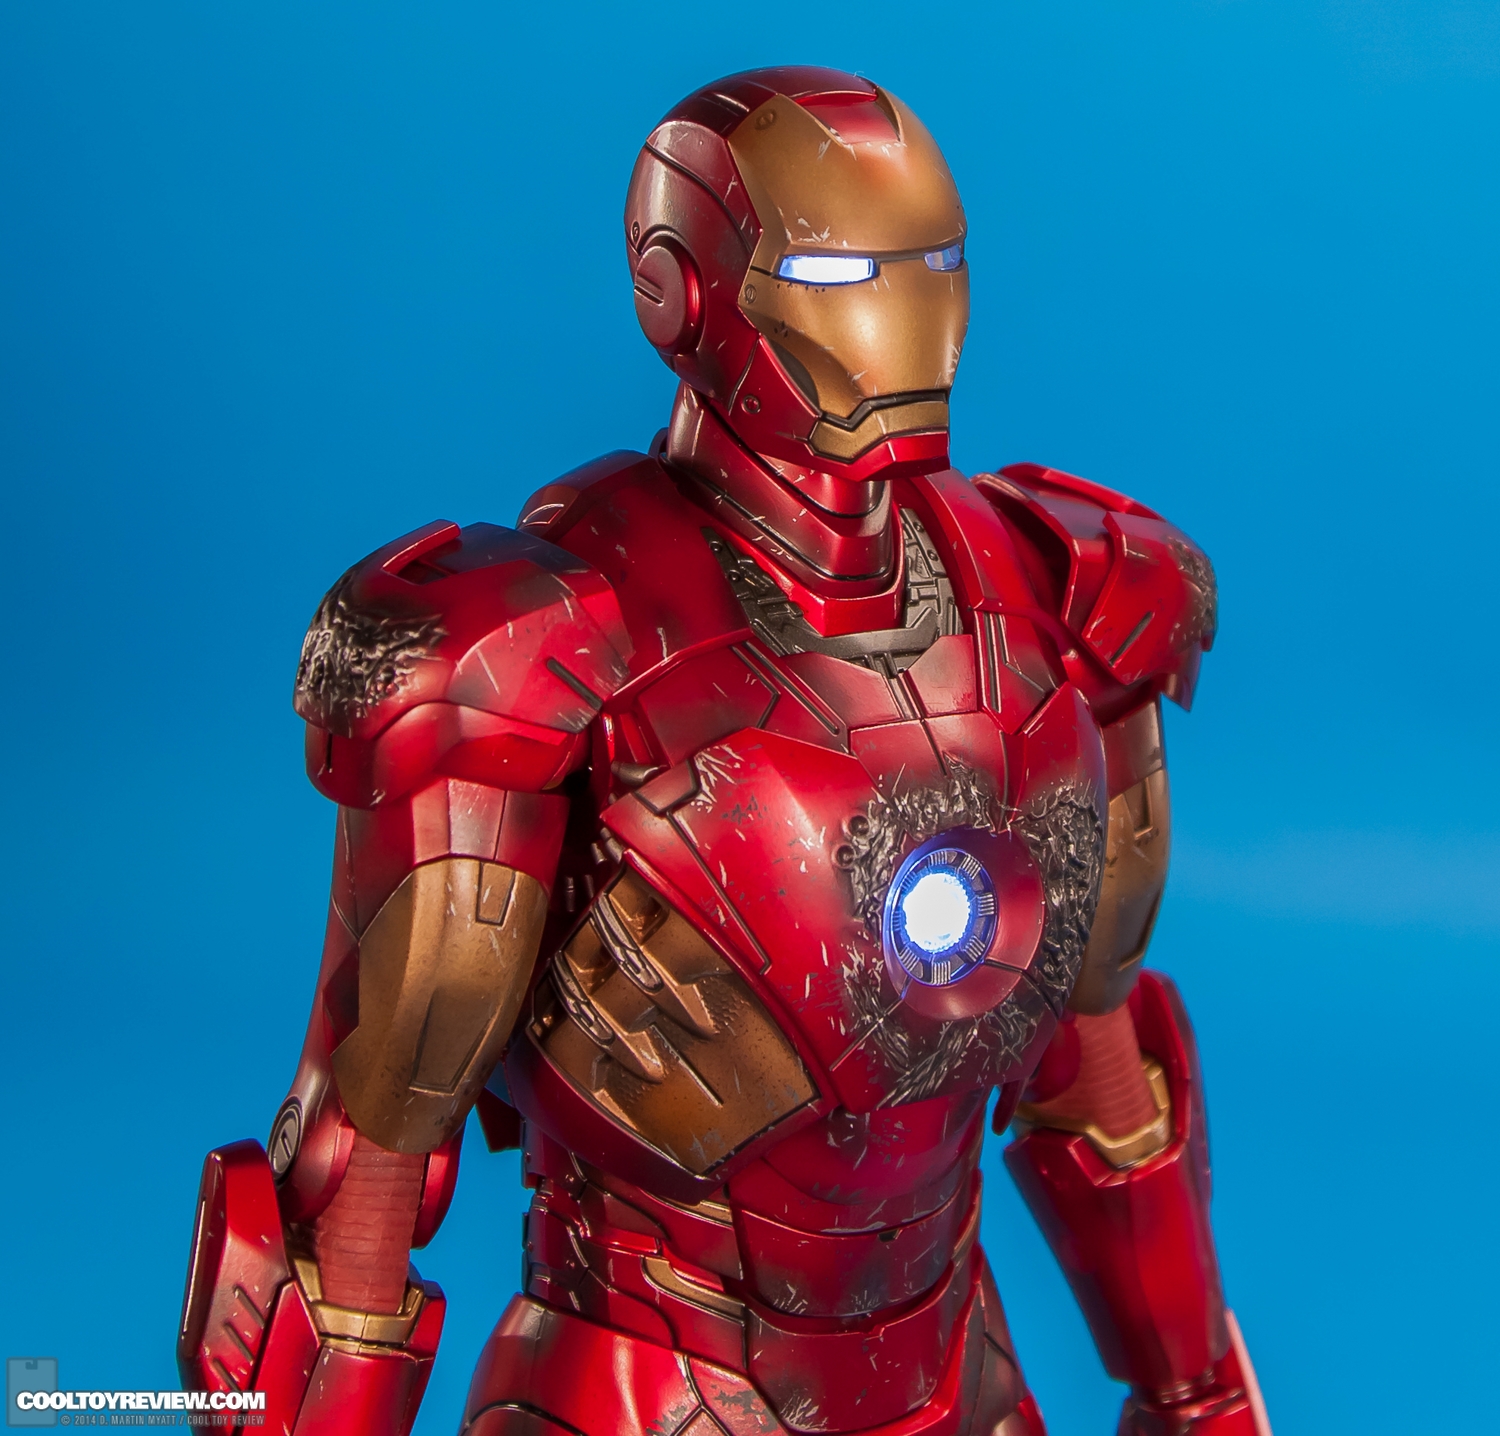 Iron-Man-Mark-VII-Battle-Damaged-Avengers-Hot-Toys-006.jpg